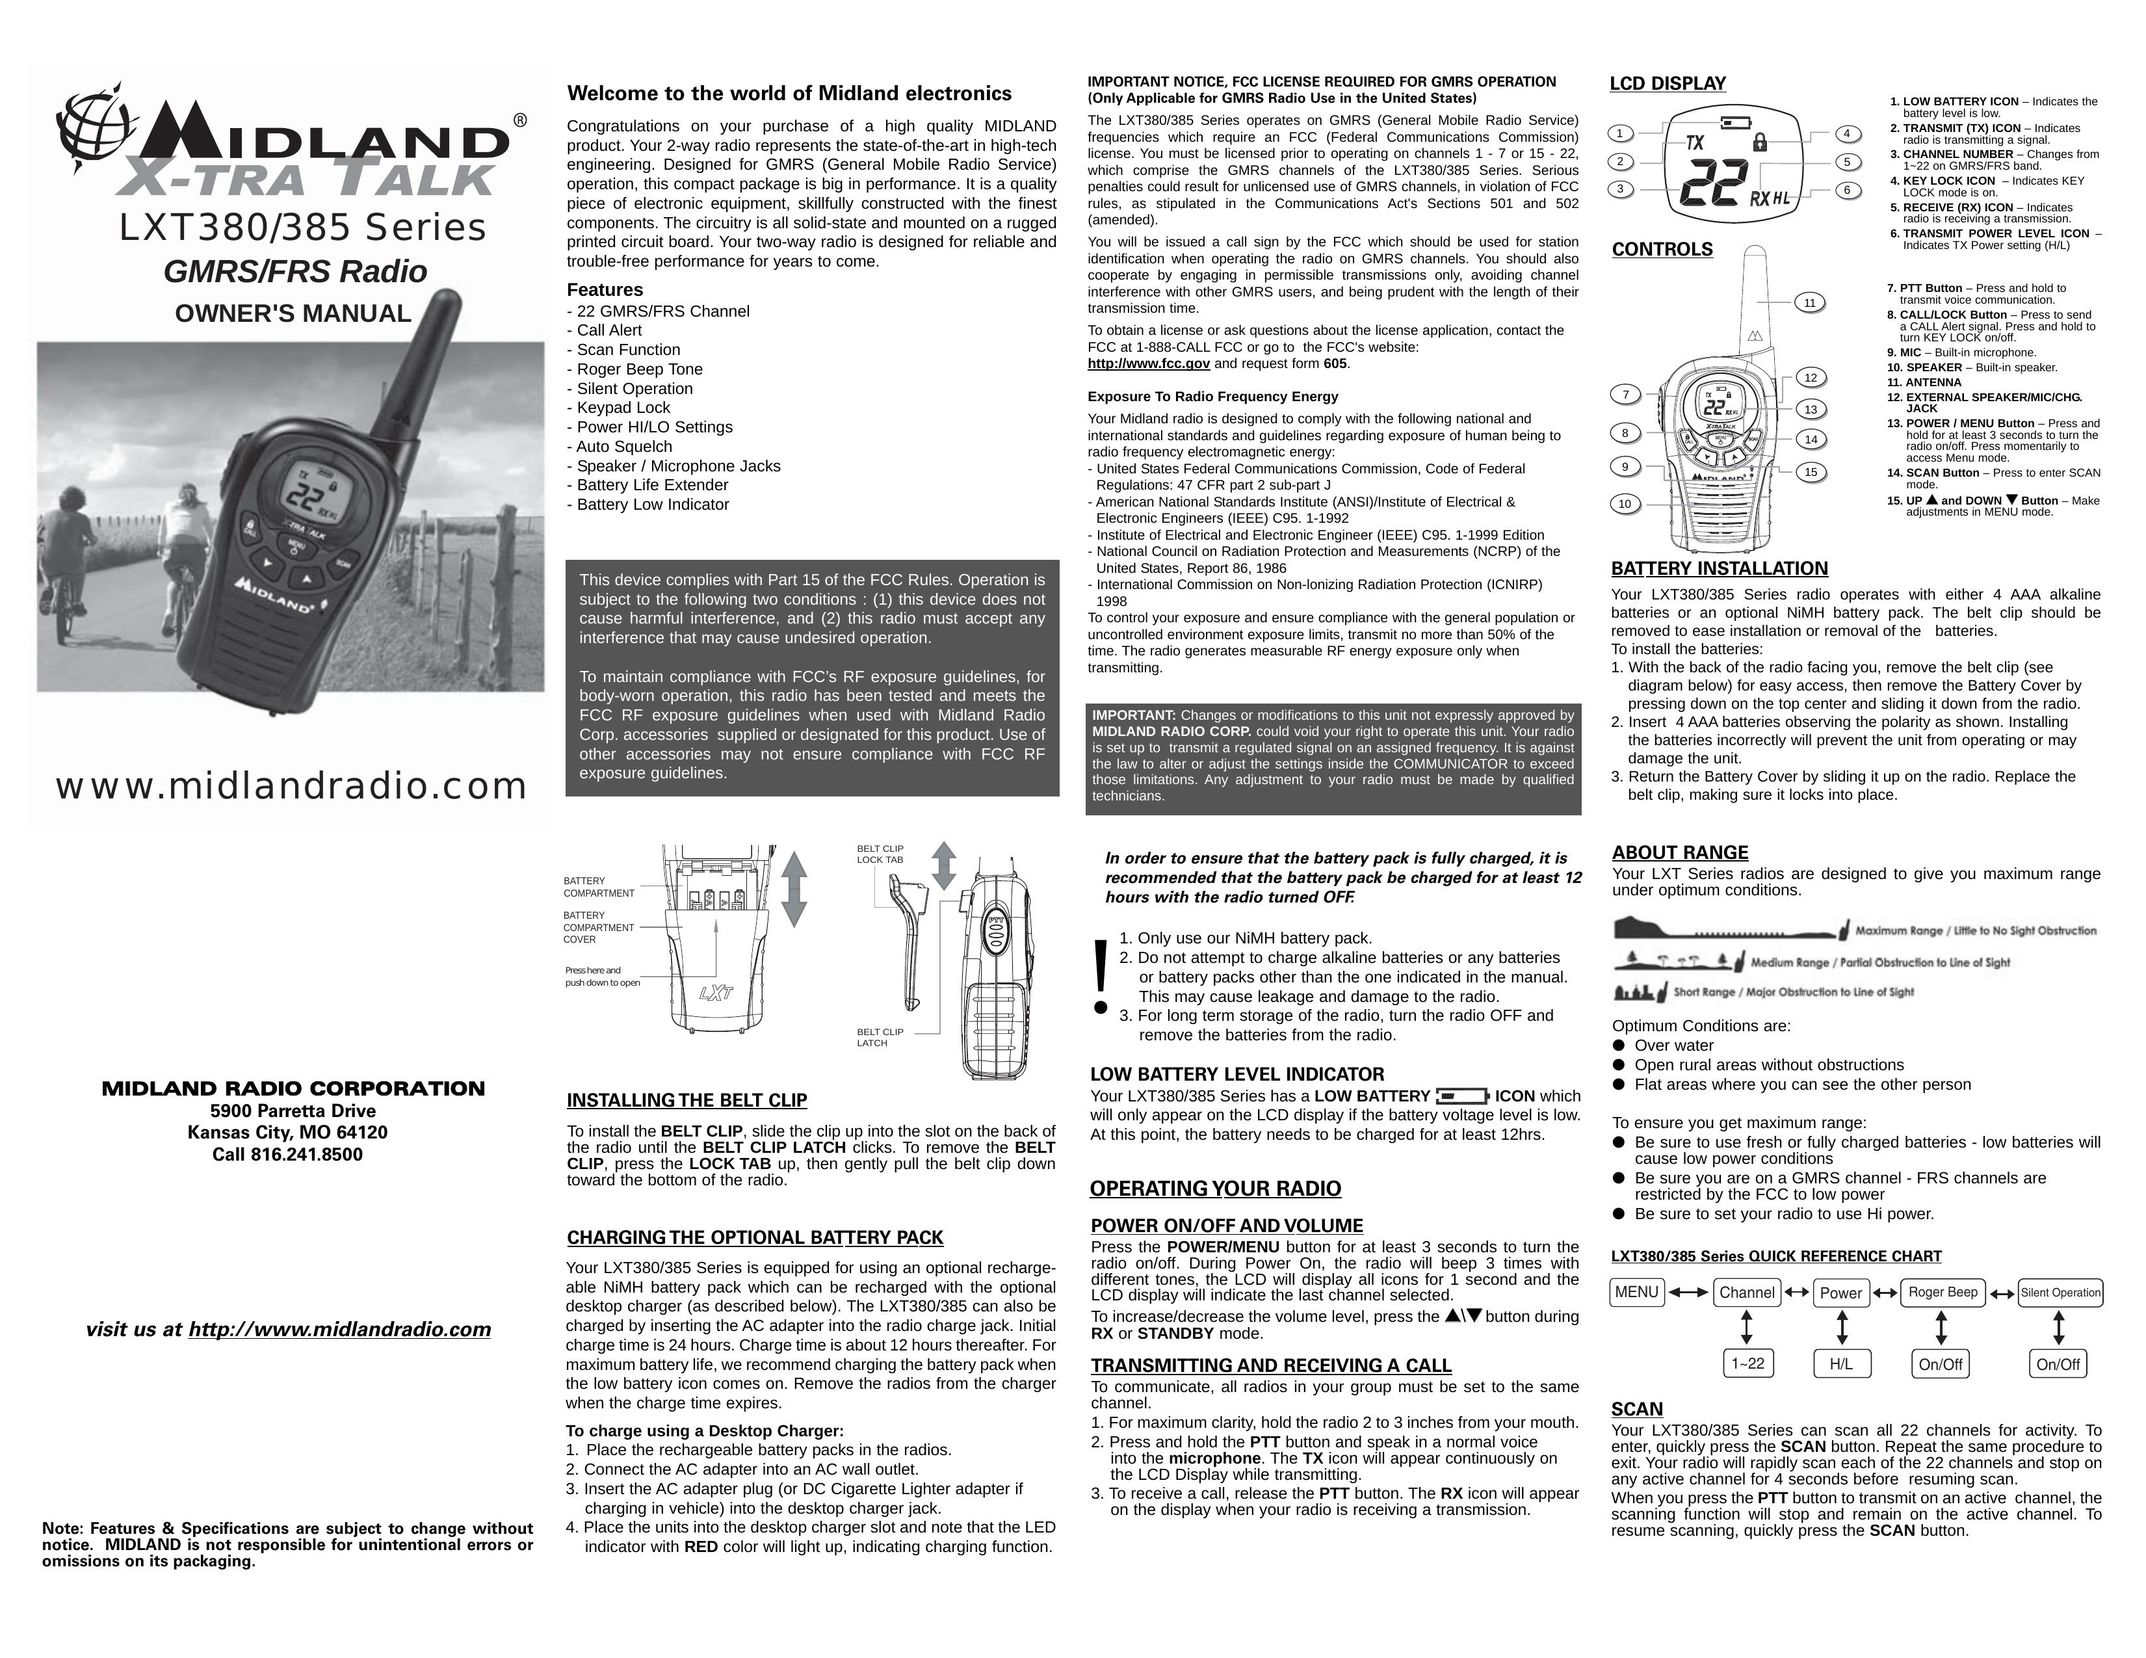 Midland Radio LXT380 Car Satellite Radio System User Manual